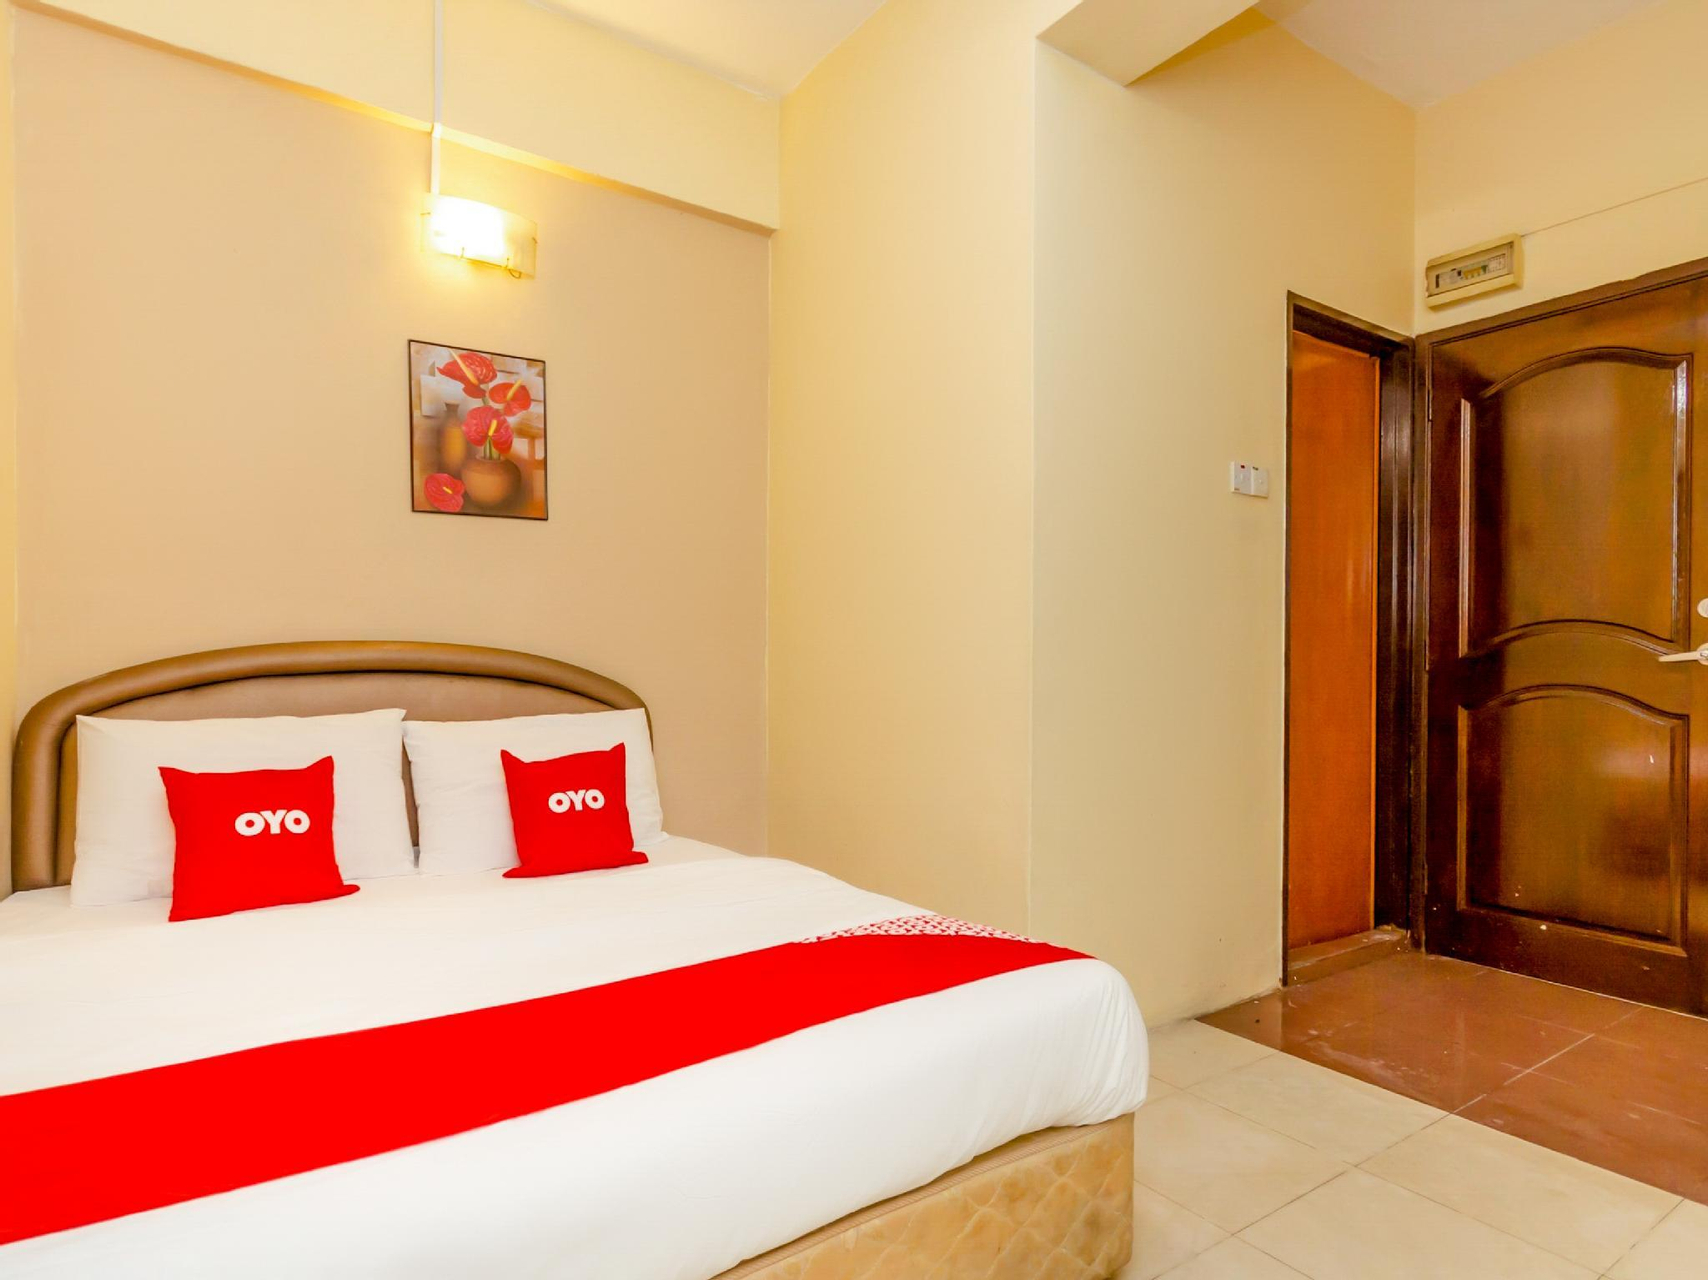 Bedroom 1, OYO 89703 B Link Hotel, Johor Bahru